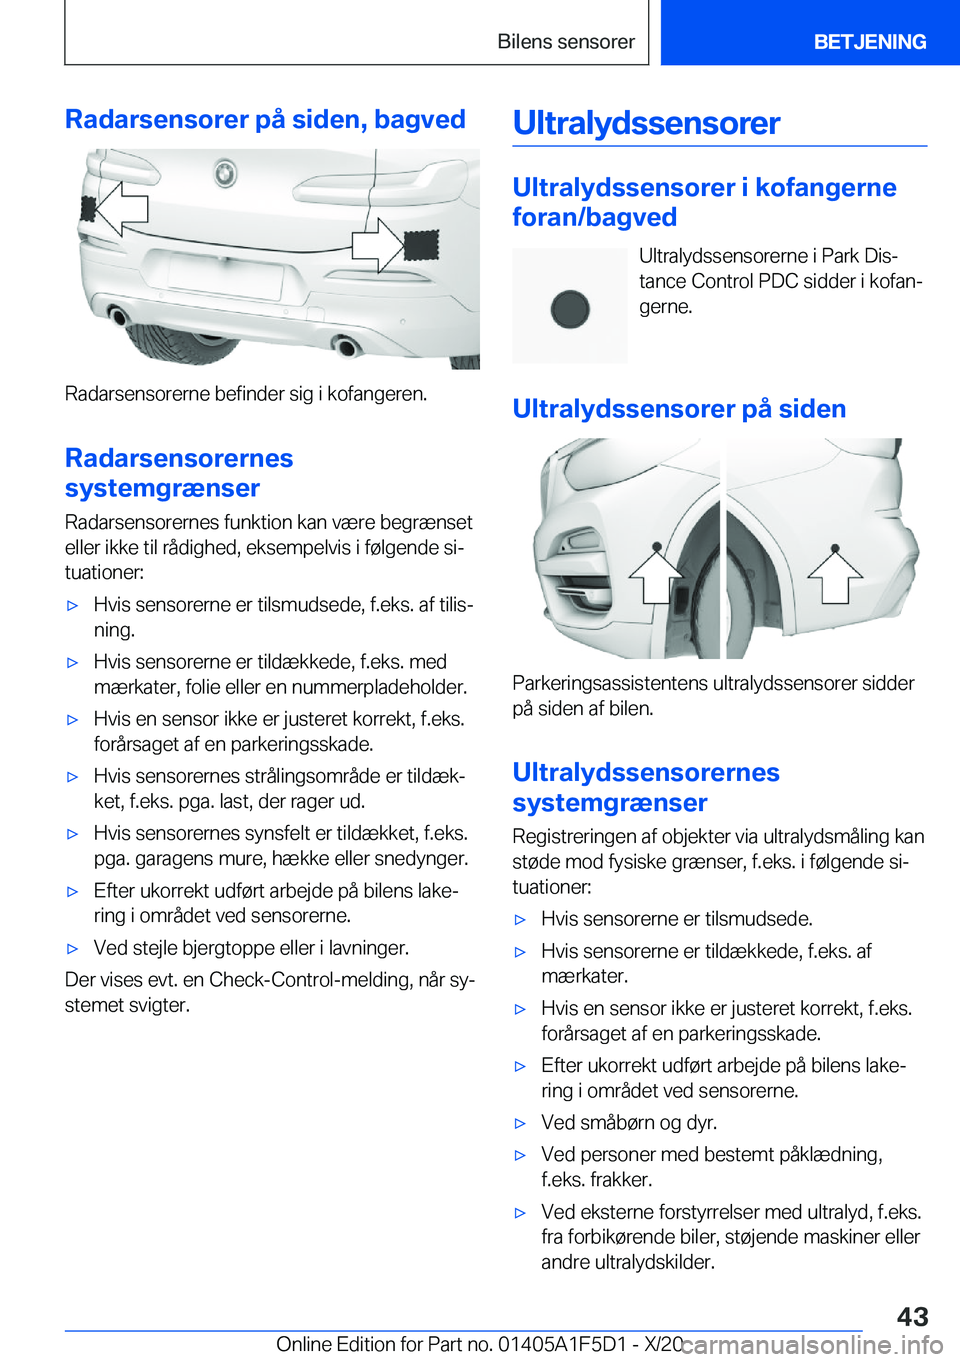 BMW X4 M 2021  InstruktionsbØger (in Danish) �R�a�d�a�r�s�e�n�s�o�r�e�r��p�å��s�i�d�e�n�,��b�a�g�v�e�d
�R�a�d�a�r�s�e�n�s�o�r�e�r�n�e��b�e�f�i�n�d�e�r��s�i�g��i��k�o�f�a�n�g�e�r�e�n�.
�R�a�d�a�r�s�e�n�s�o�r�e�r�n�e�s
�s�y�s�t�e�m�g�r�æ�